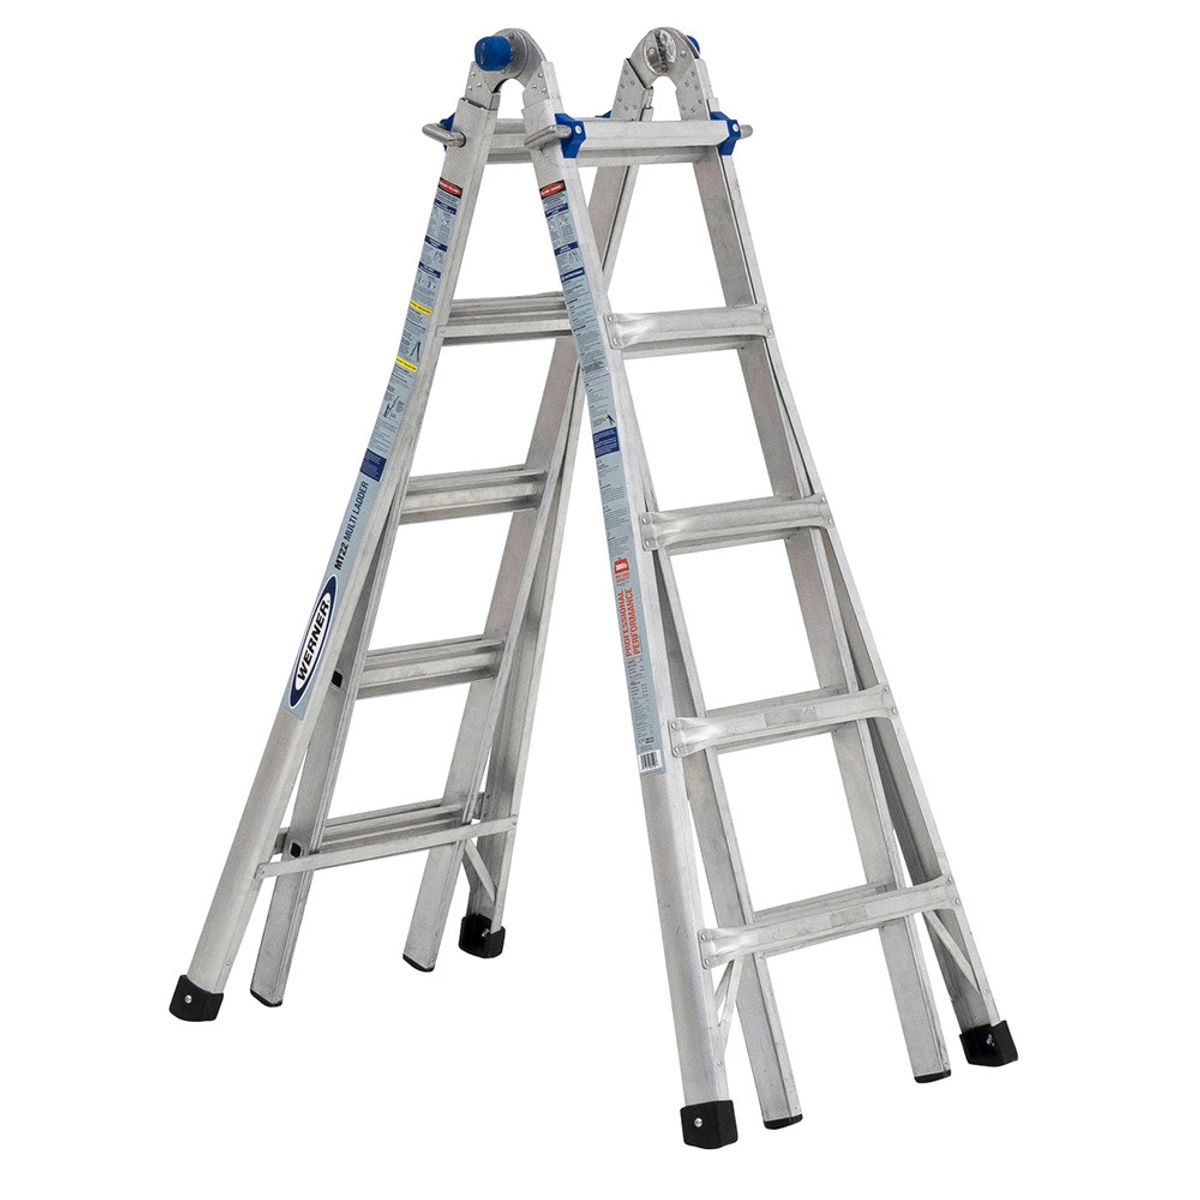 Werner Model AC24 Multipurpose Project Ladder Tray for sale online 